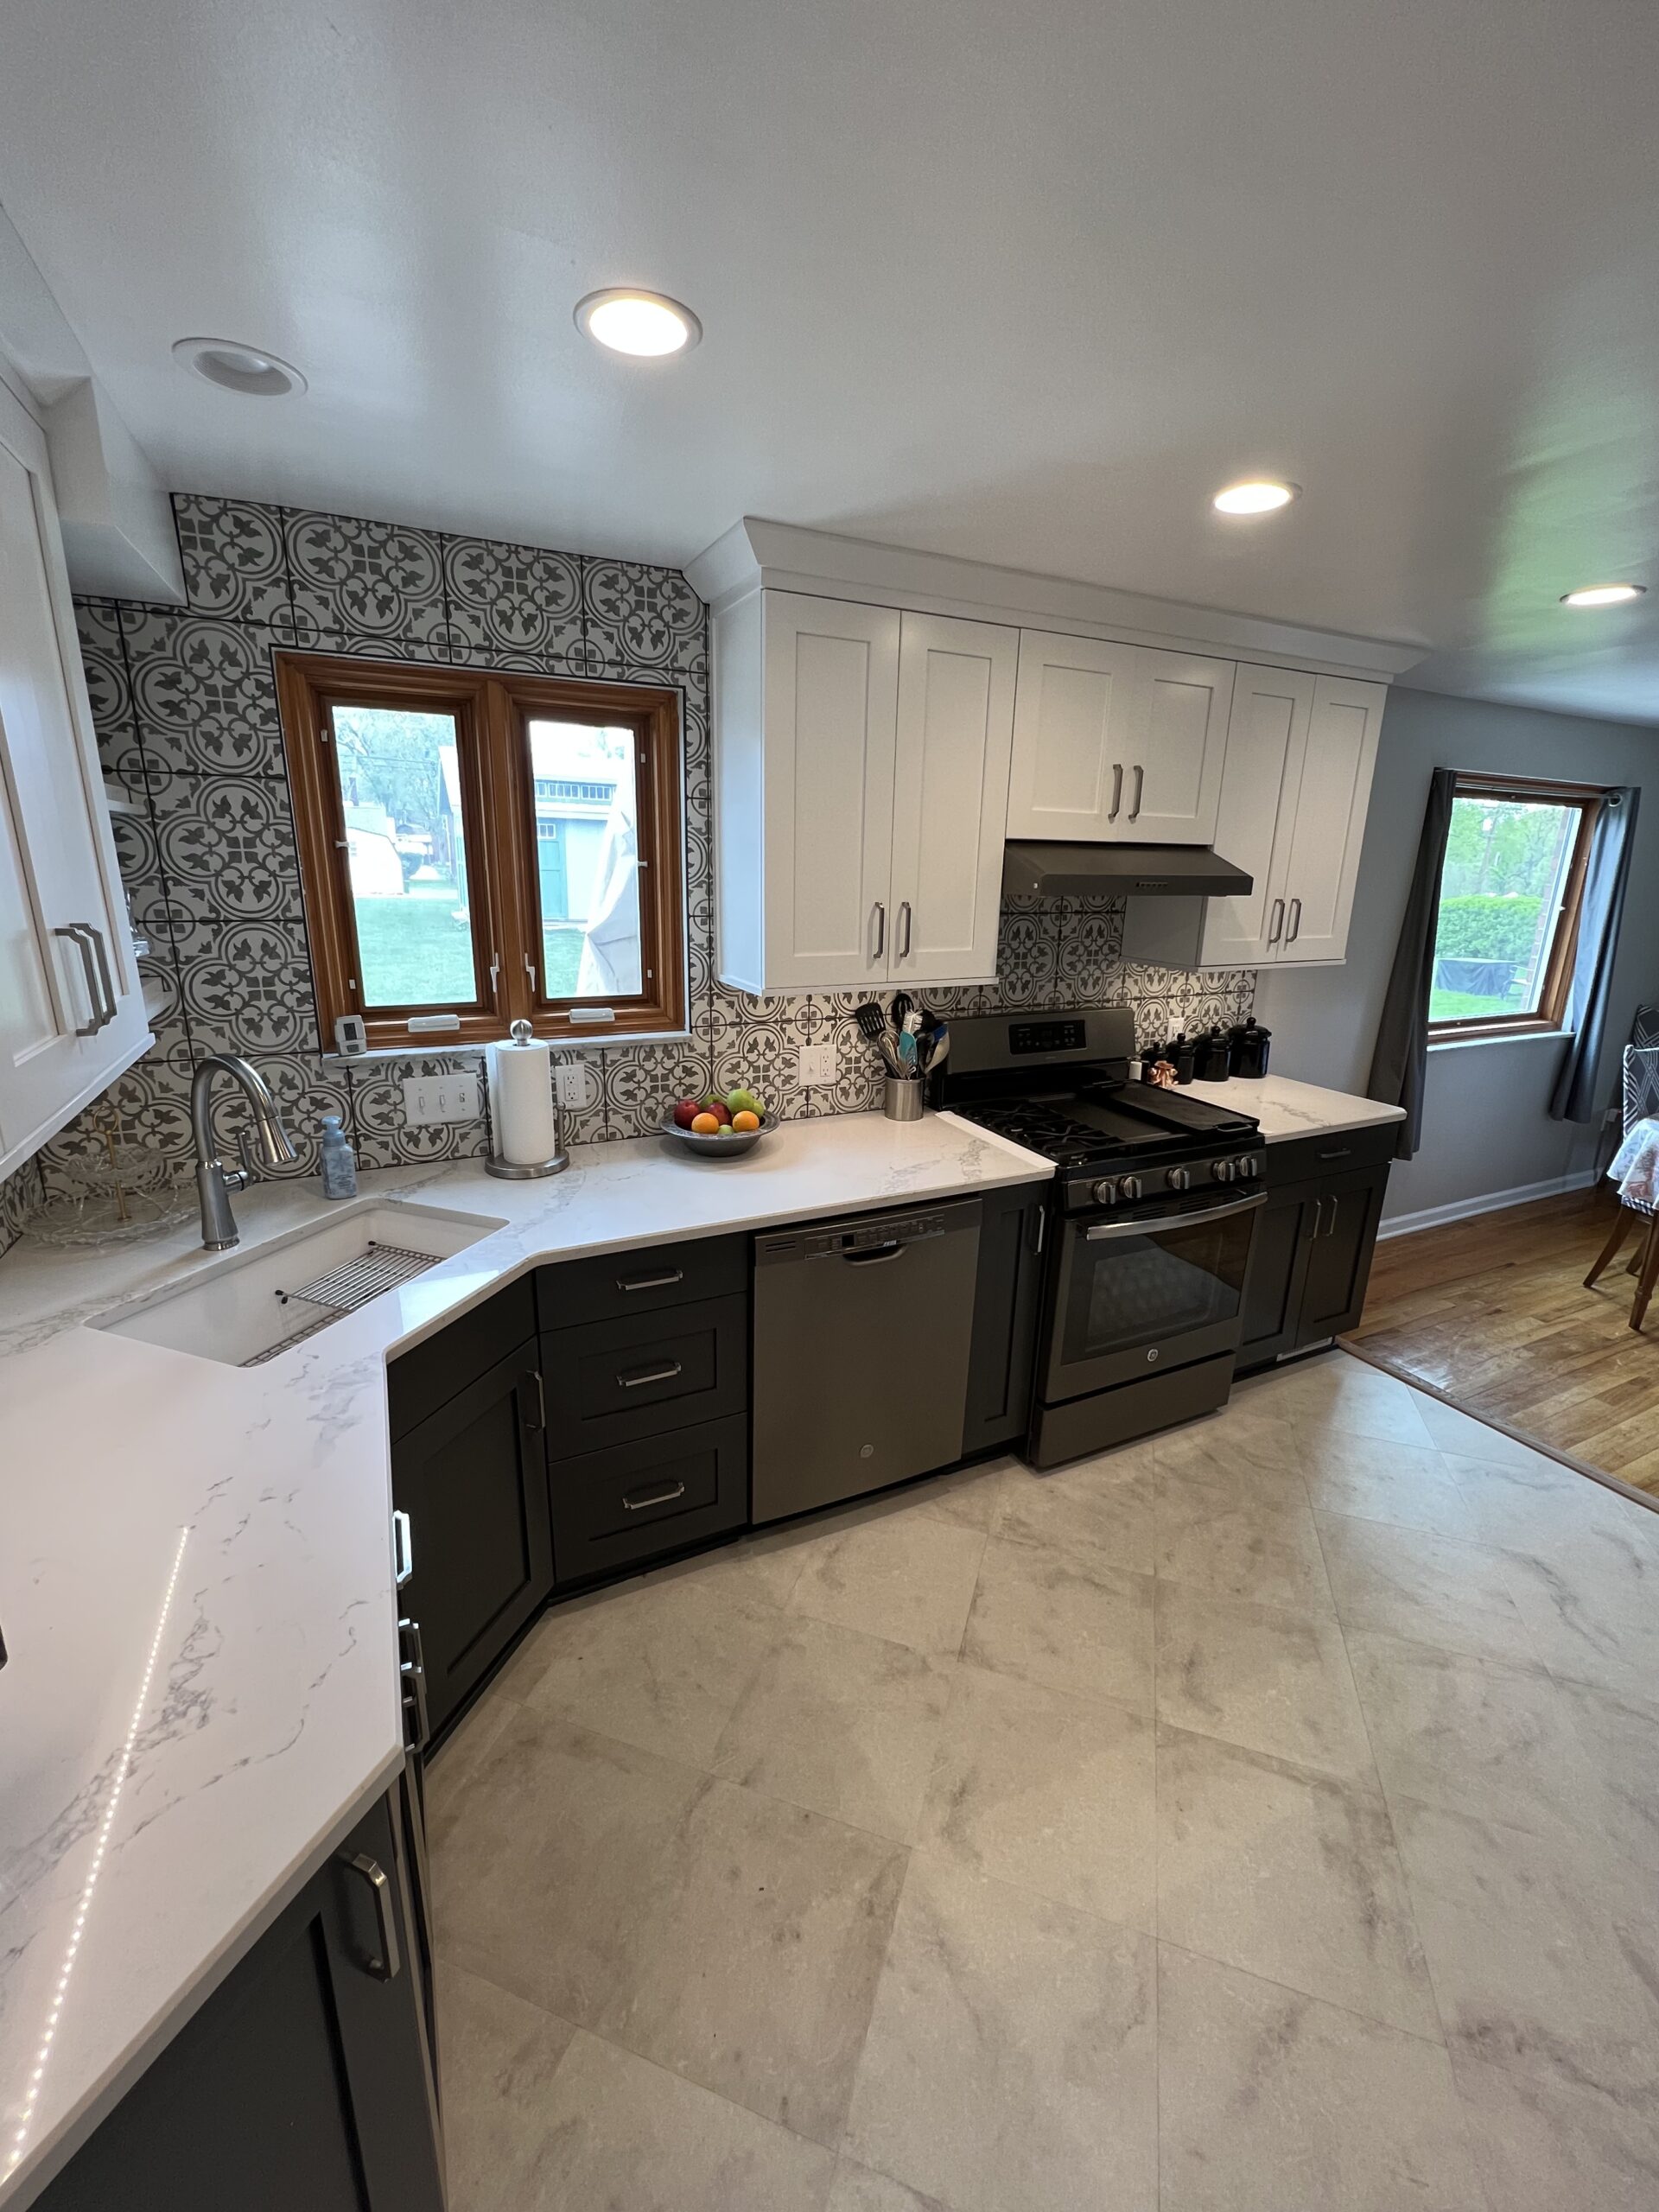 Modern black and white kitchen, white wall cabinets, black base cabinets, white marble countertops, backsplash arabesque design